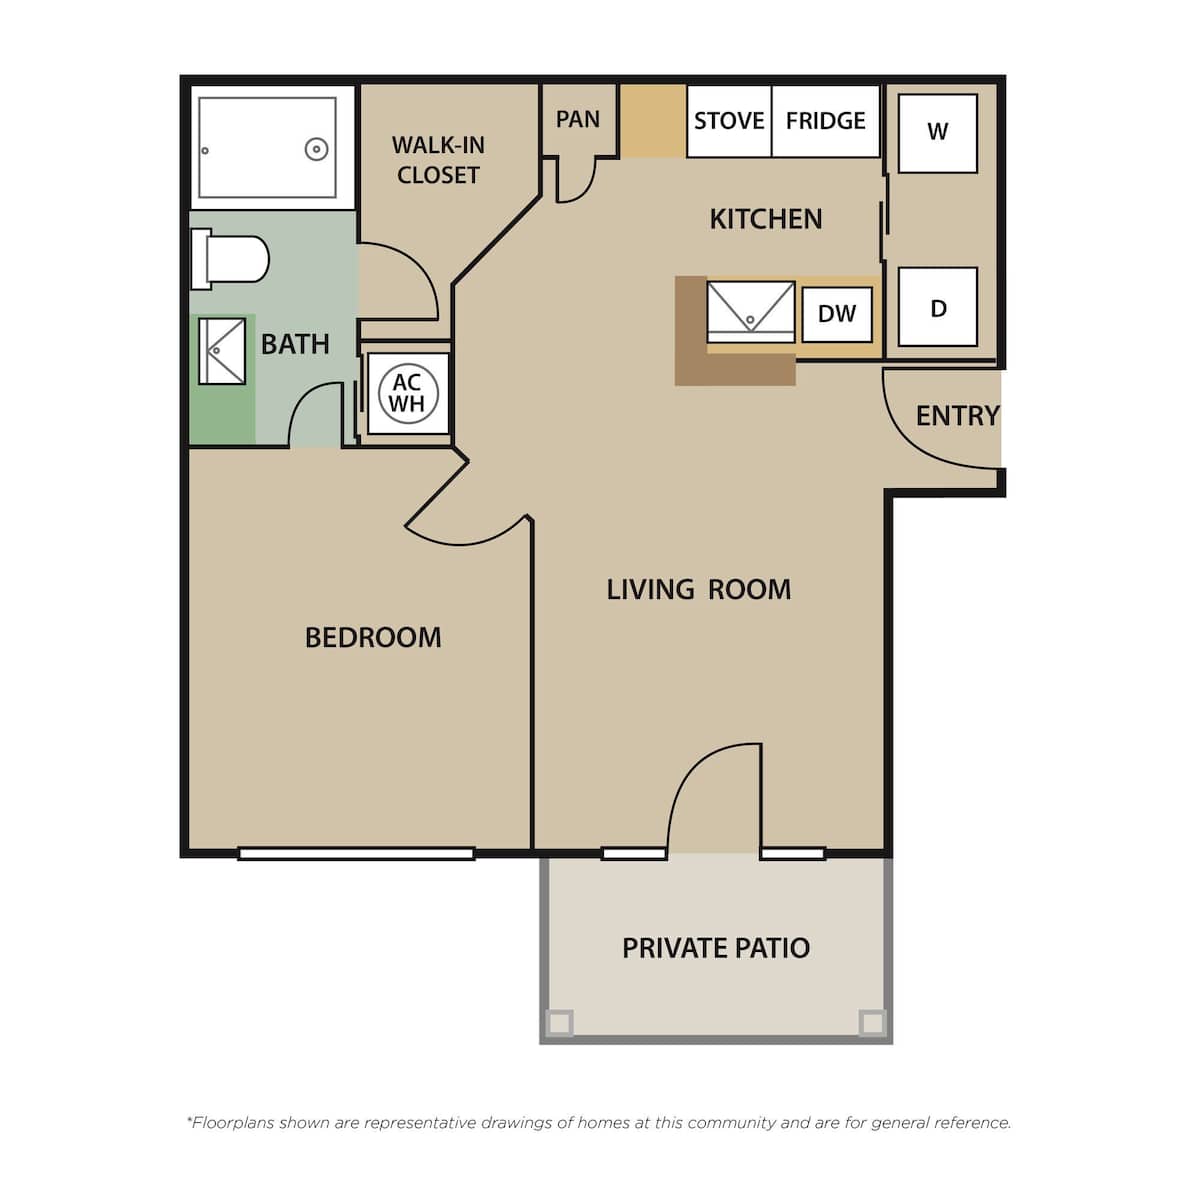 Floorplan diagram for GROVE A1, showing 1 bedroom